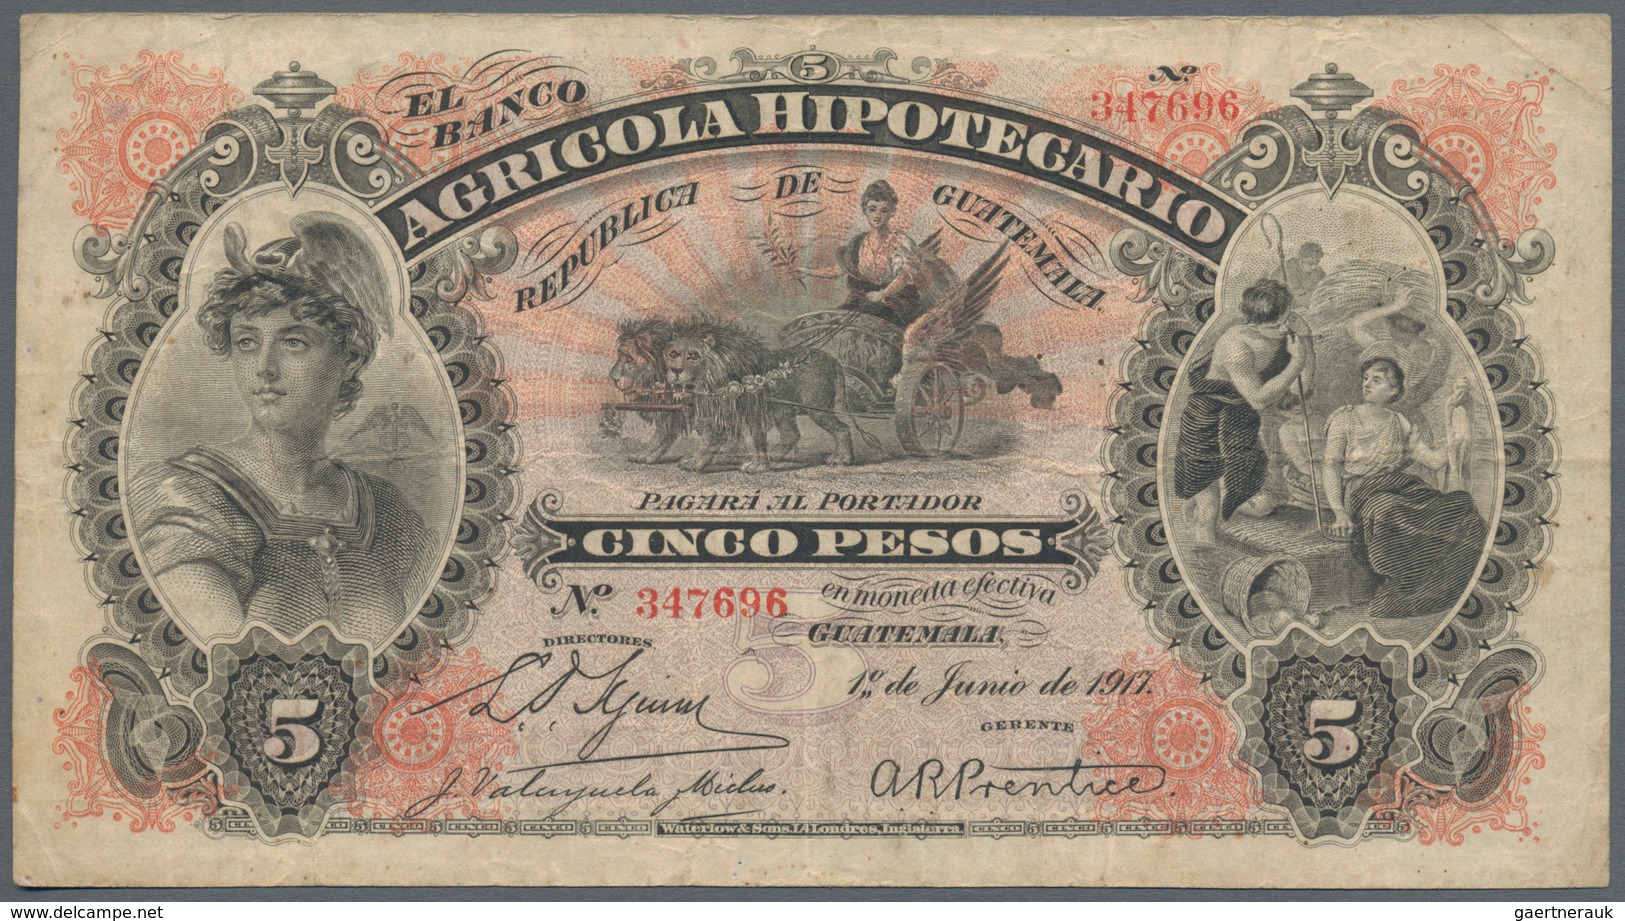 Guatemala: Banco Agrícola Hipotecario 5 Pesos 1917, P.S102c, Still Nice With Several Folds And Creas - Guatemala